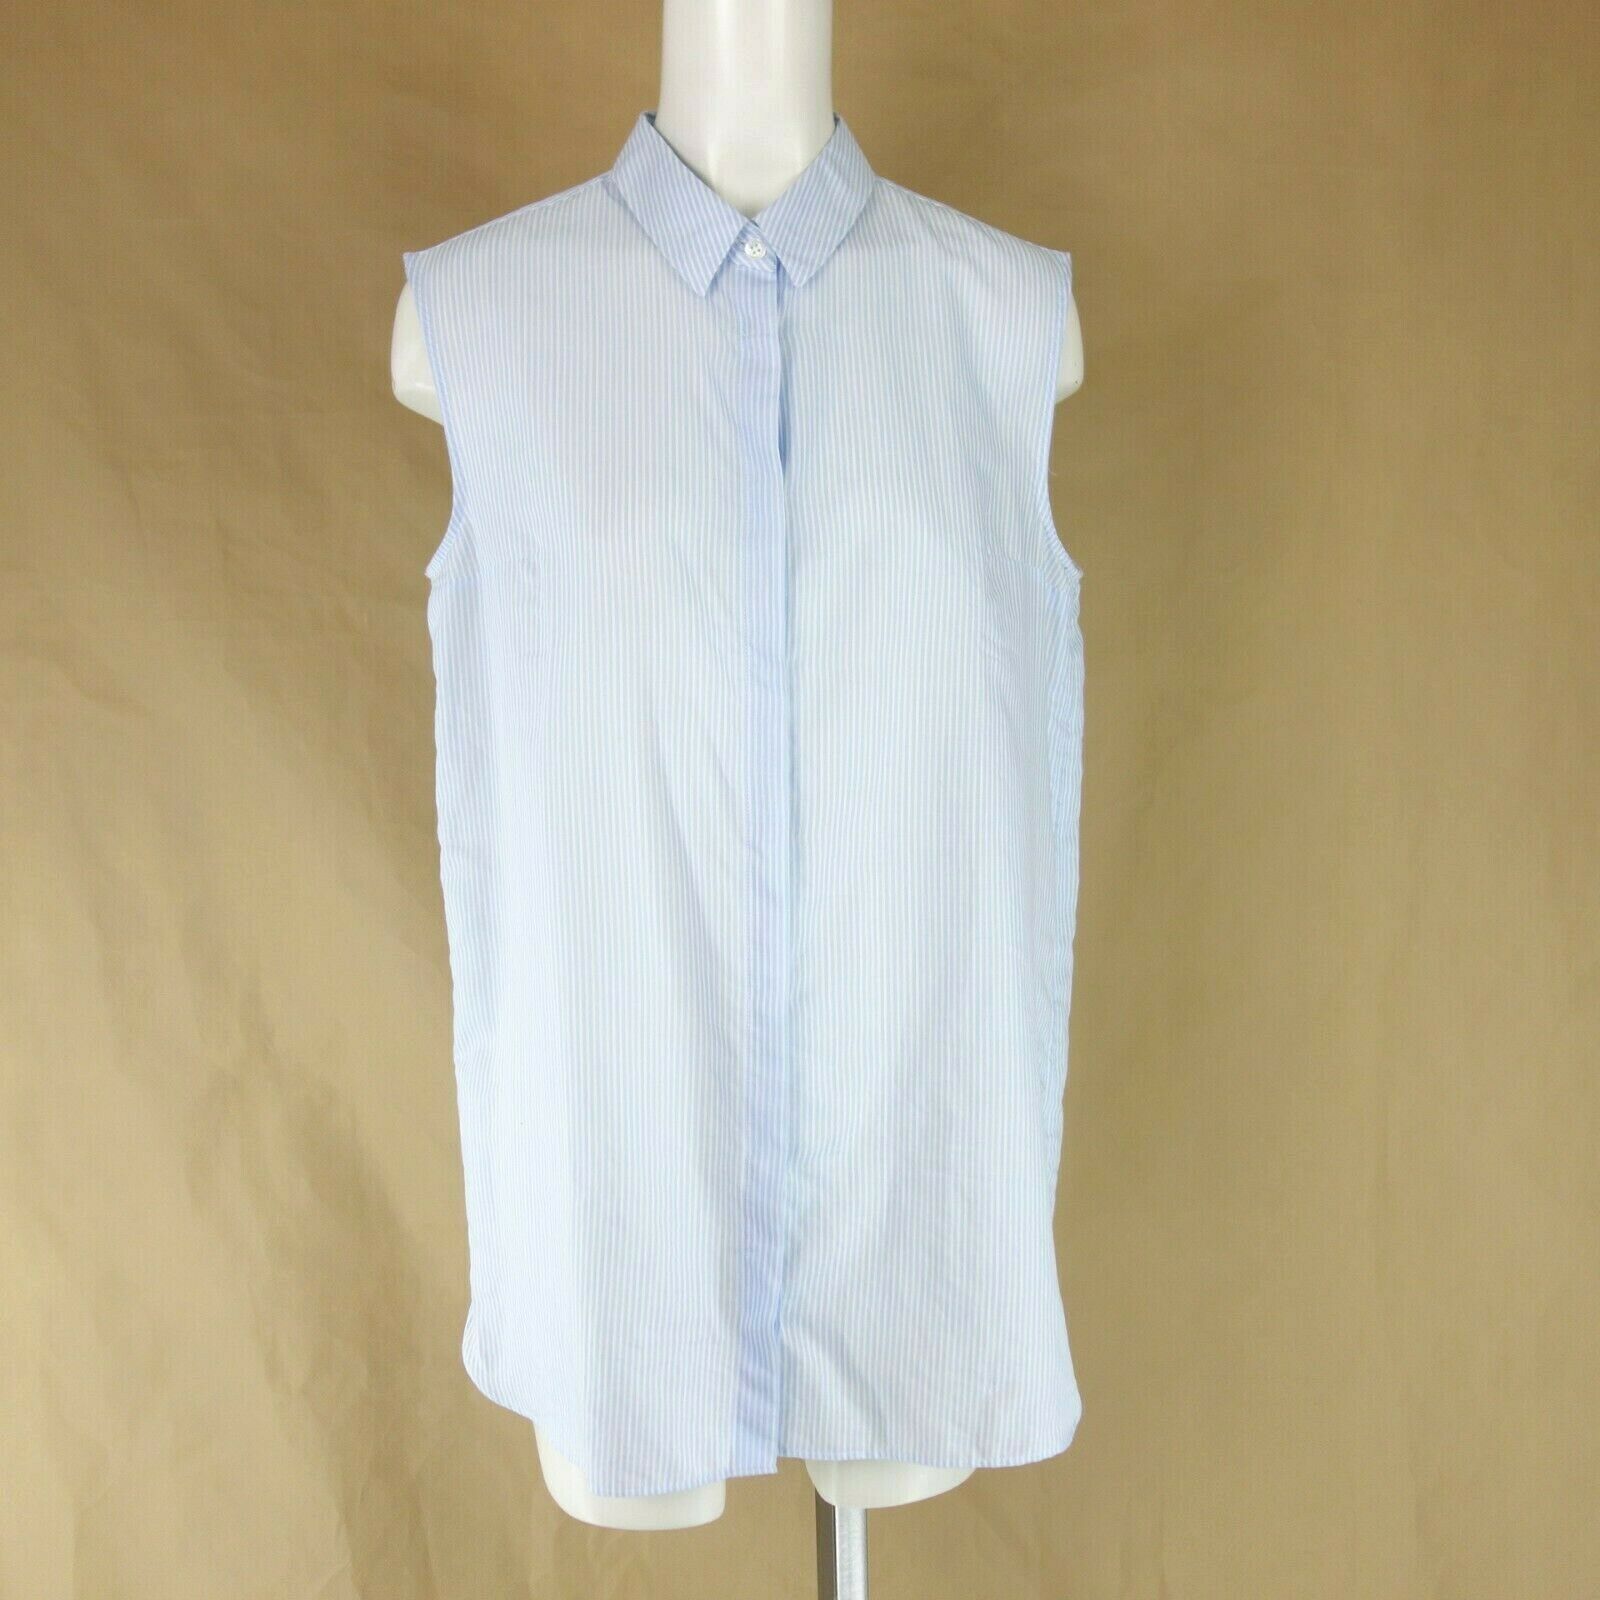 Acne Studios Damen Bluse Shirt Damenshirt Oberteil Tunika Blau Weiß Gr 40 L Neu